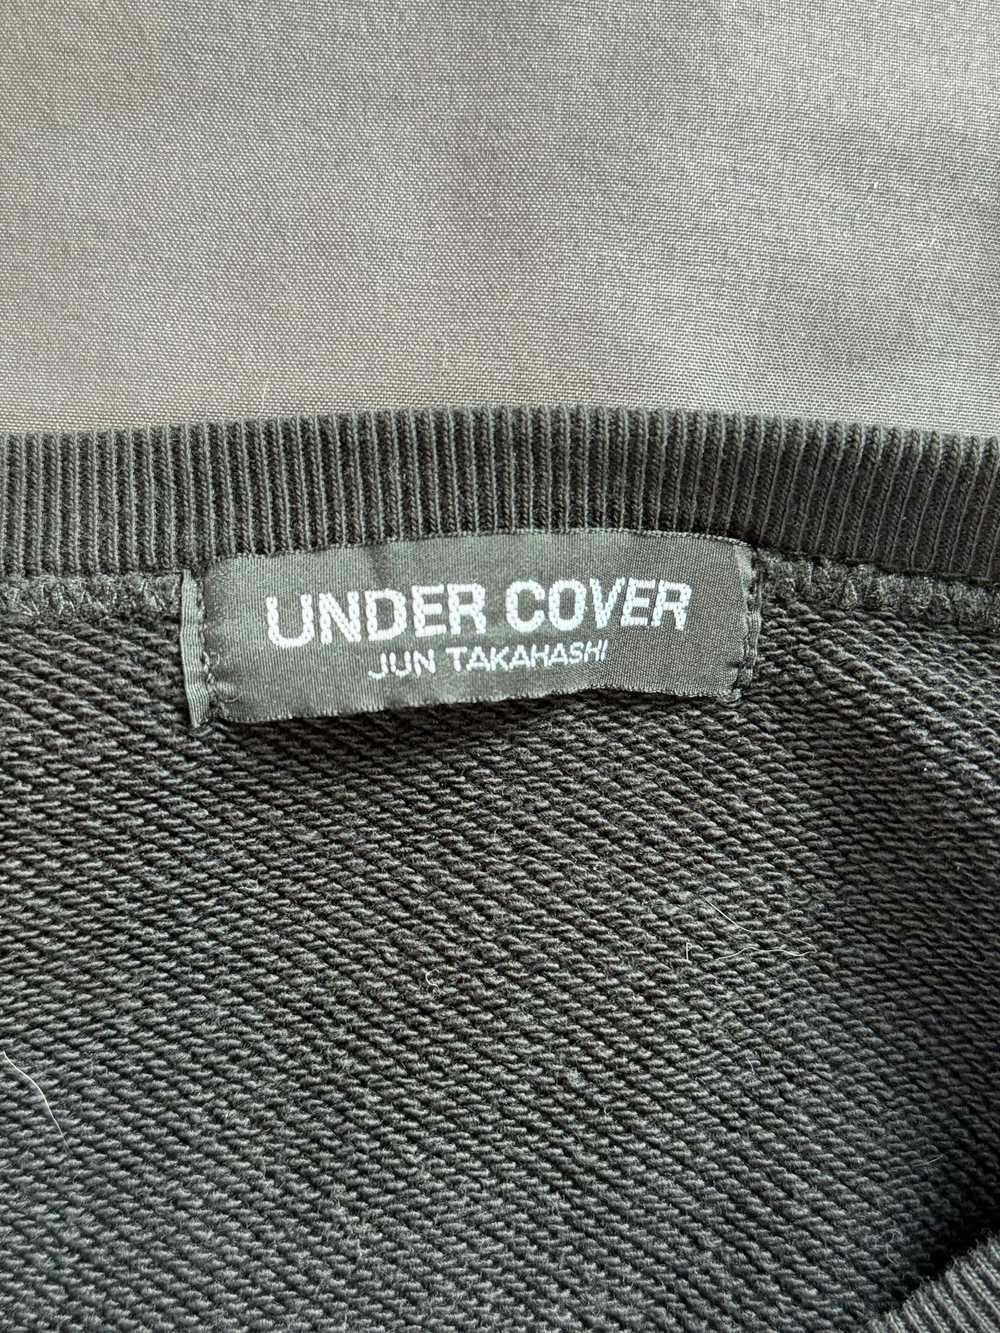 Undercover Undercover "U" Sweatshirt Size M (2) - image 3